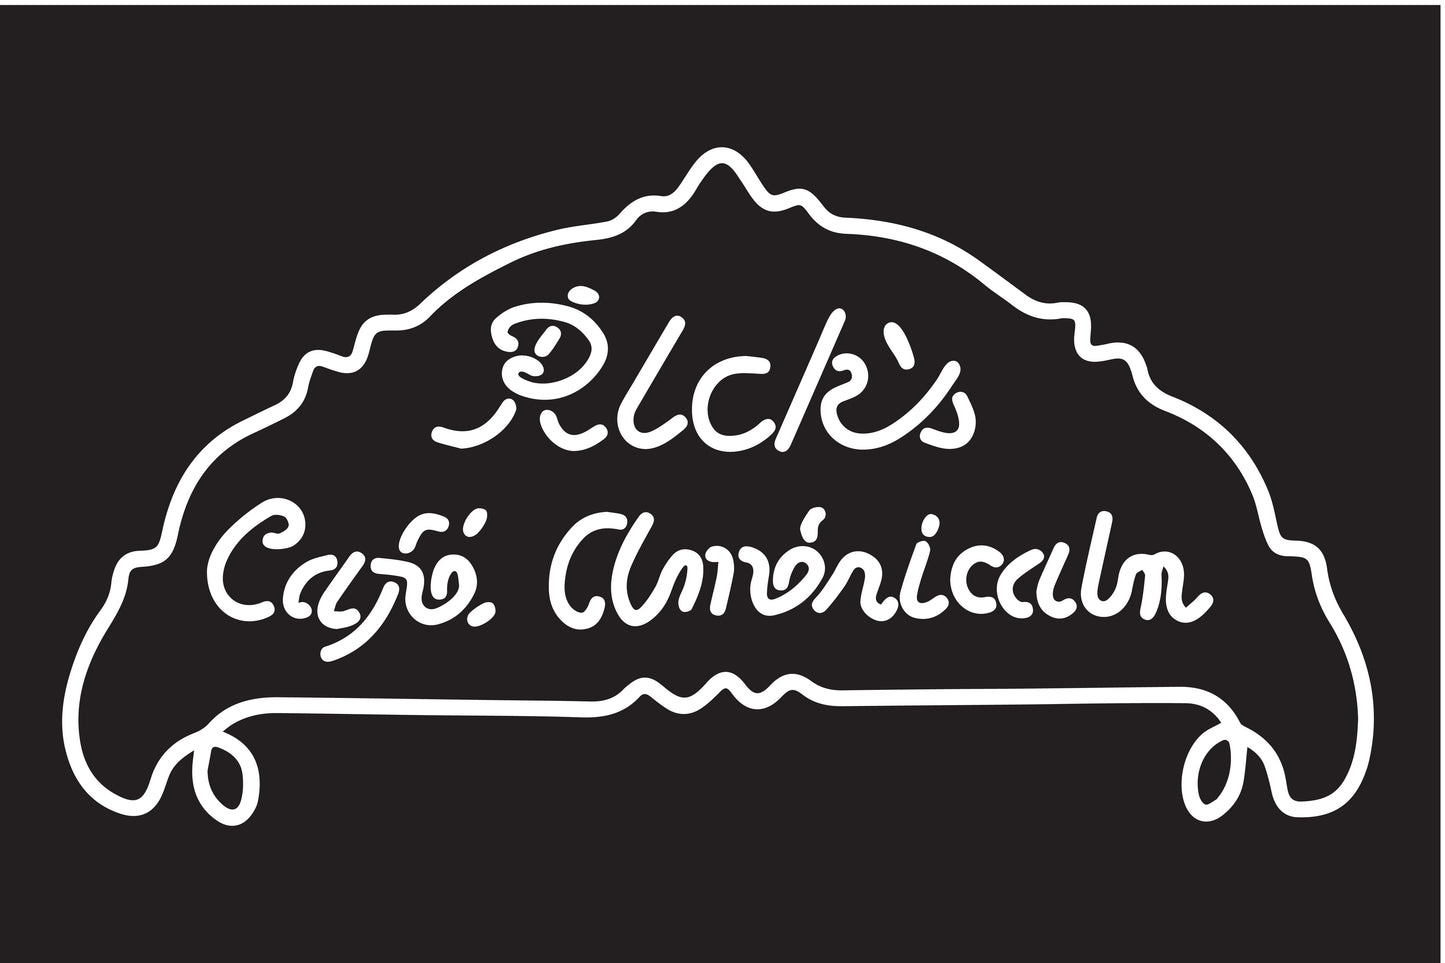 Rick's Cafe Americain Casablanca Sign